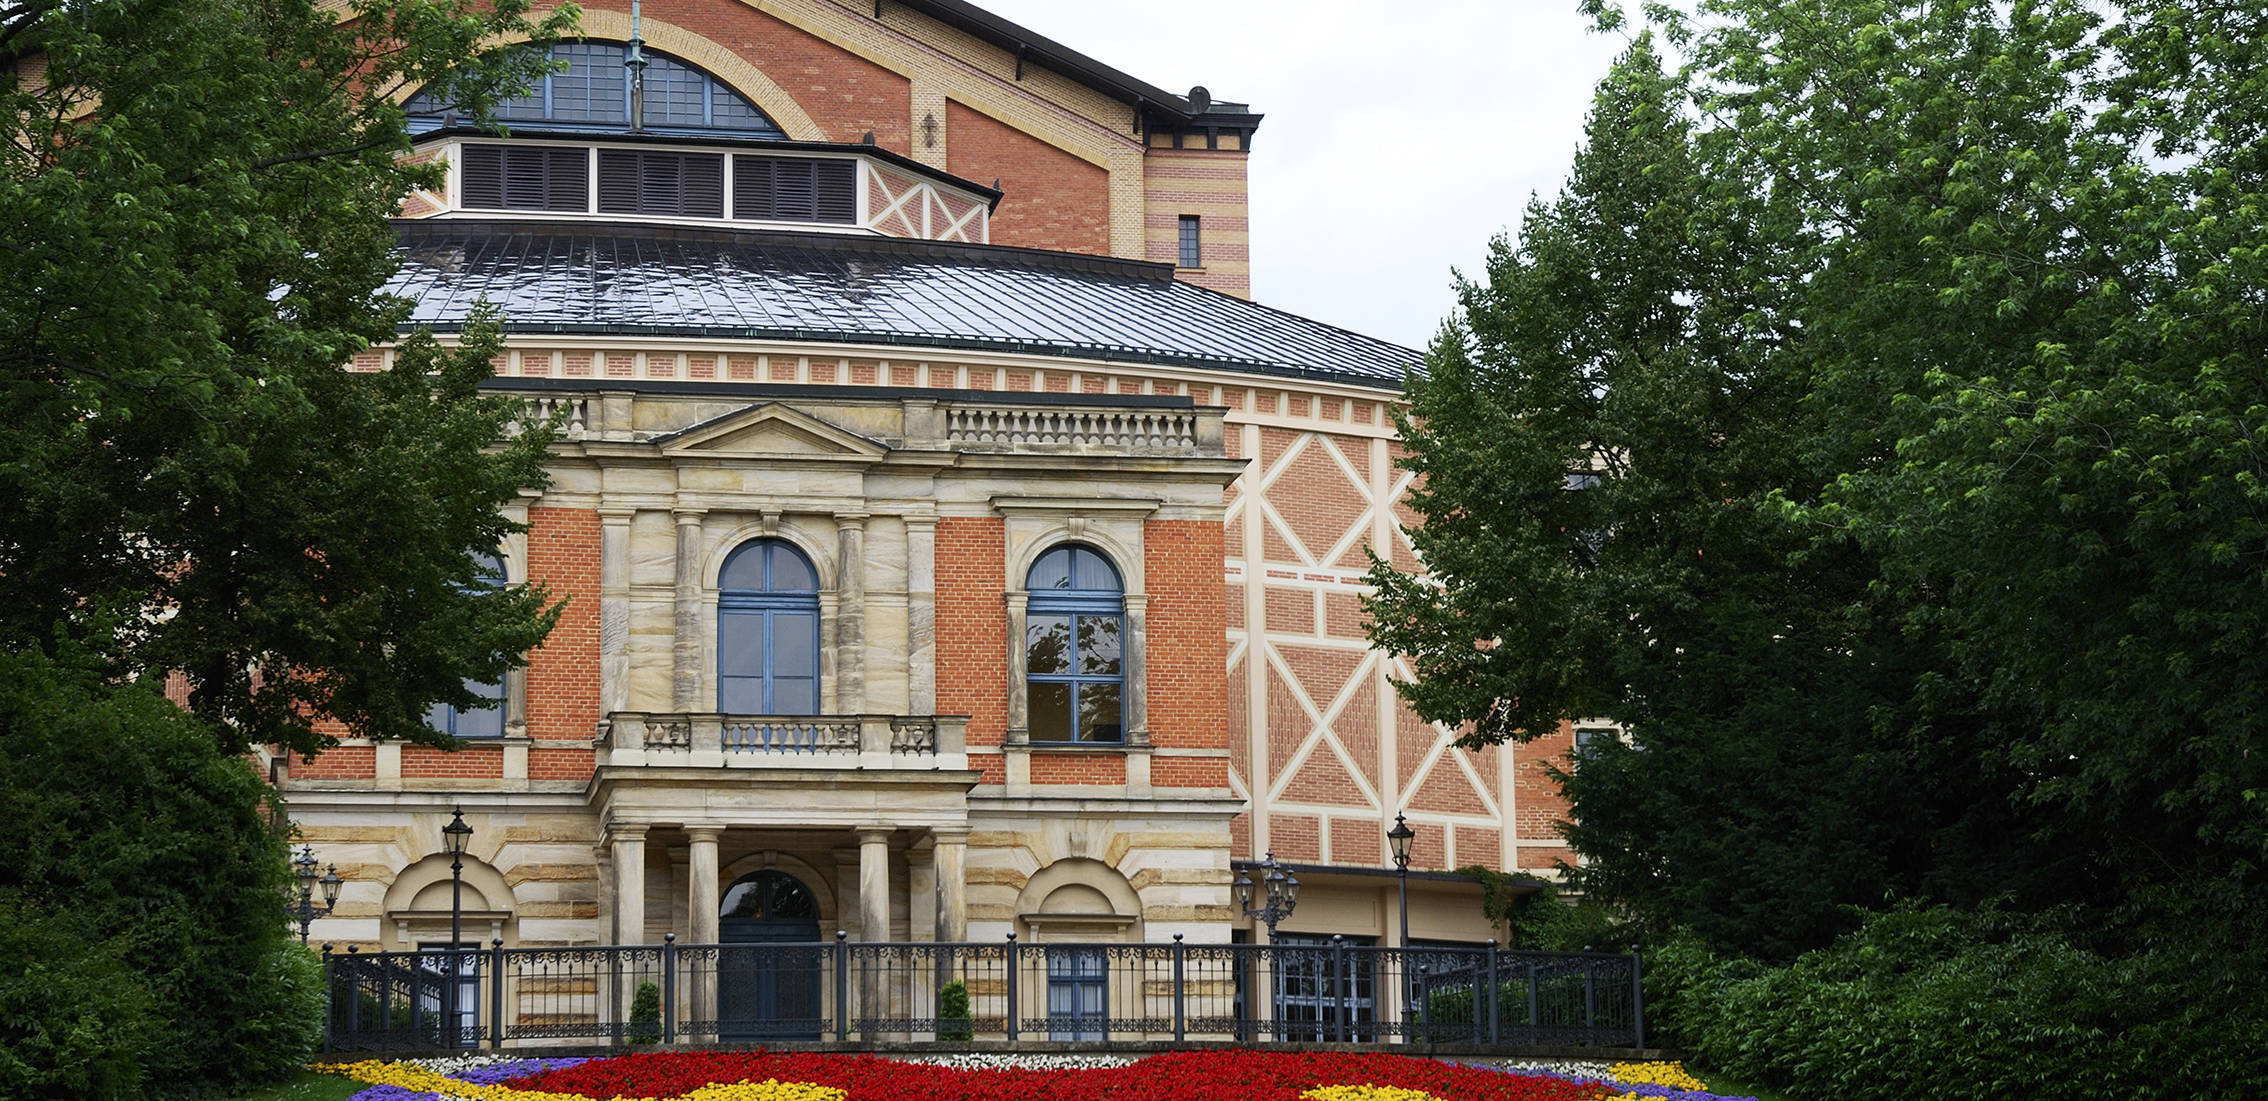 Maison du festival de Bayreuth - H4 Hotel Residenzschloss Bayreuth - Site internet officiel